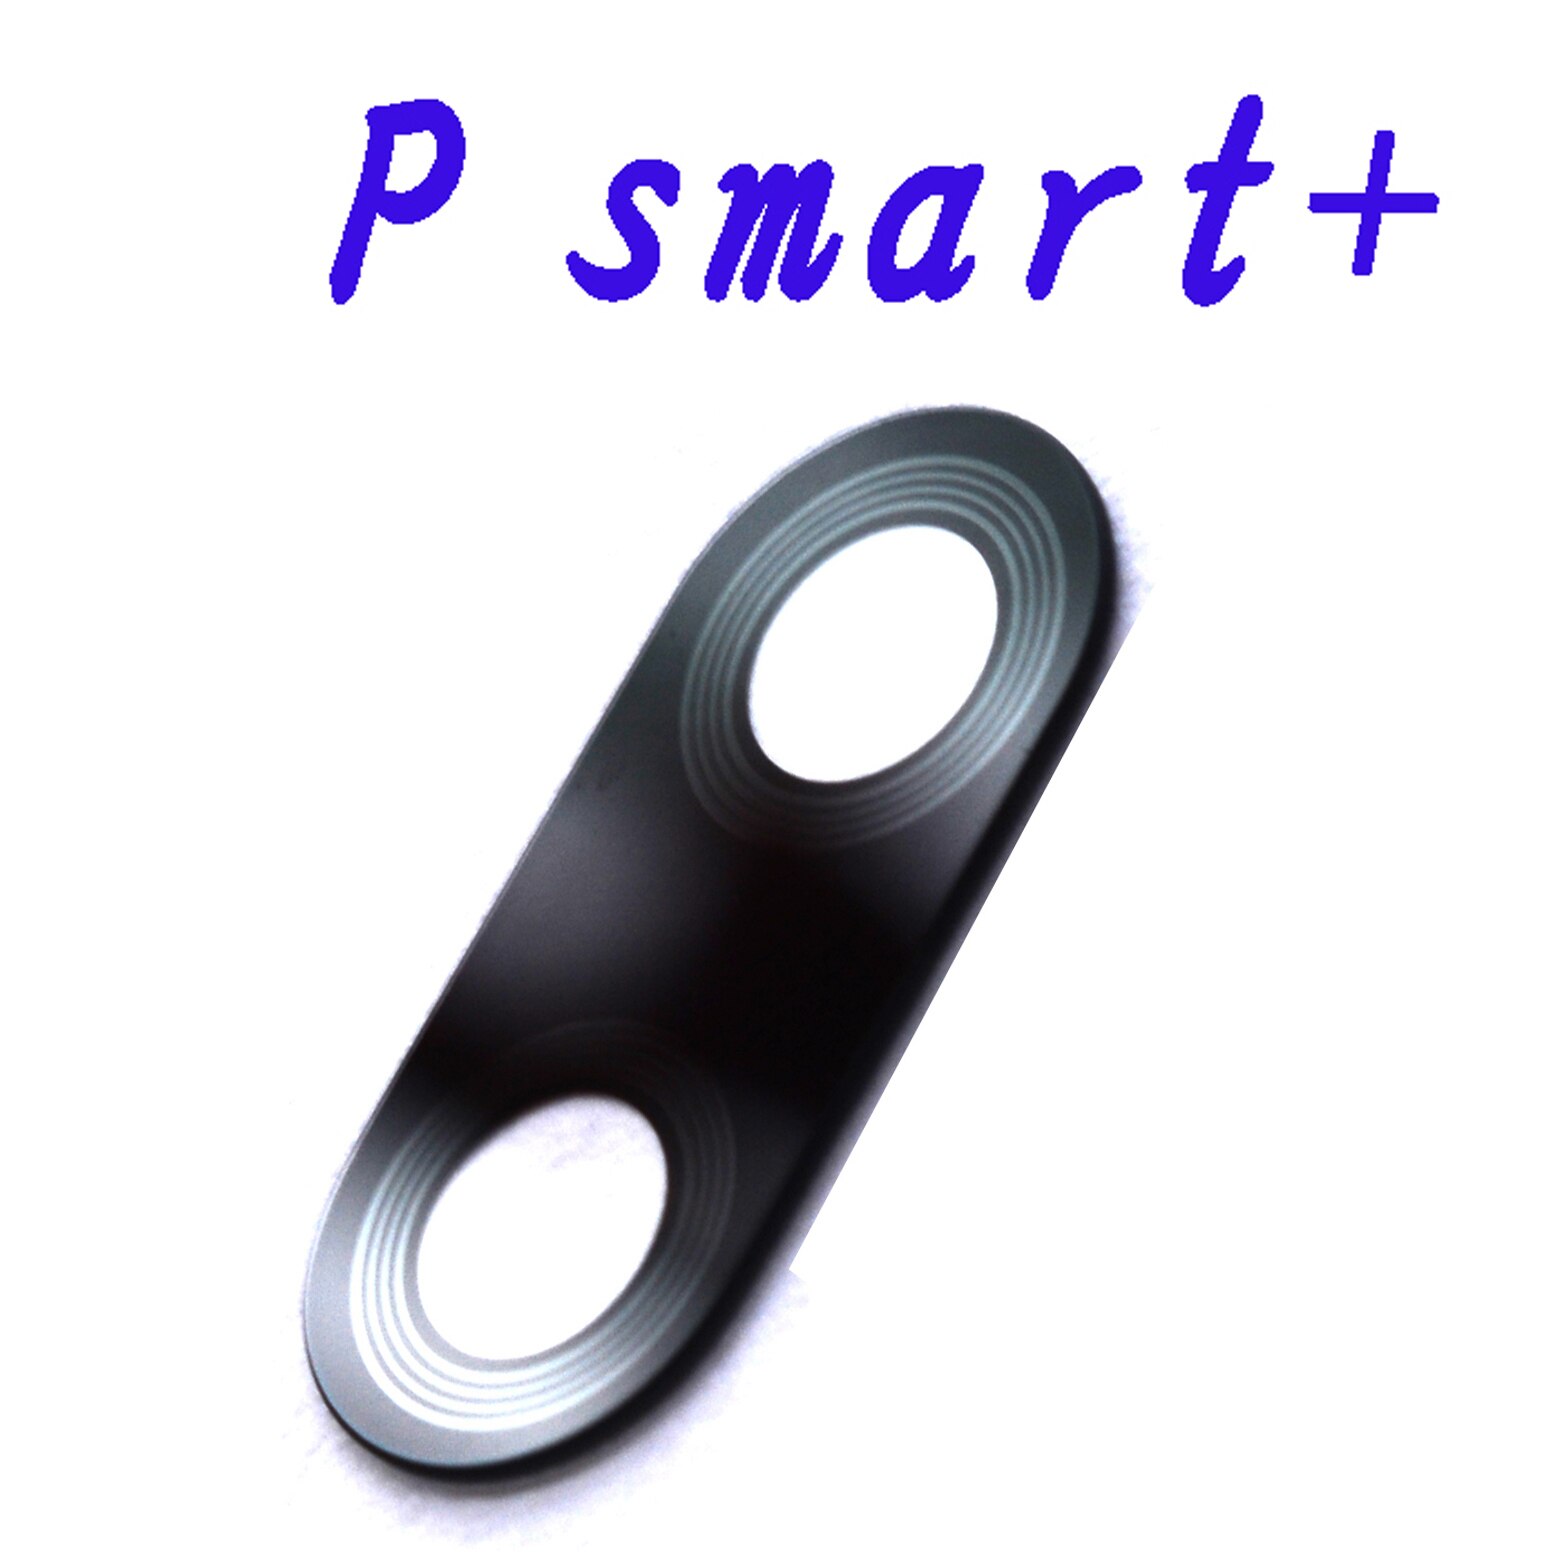 For p smart pro alkuperäinen takakameran lasilinssi huaweille p smart + p smart +: P smart plus